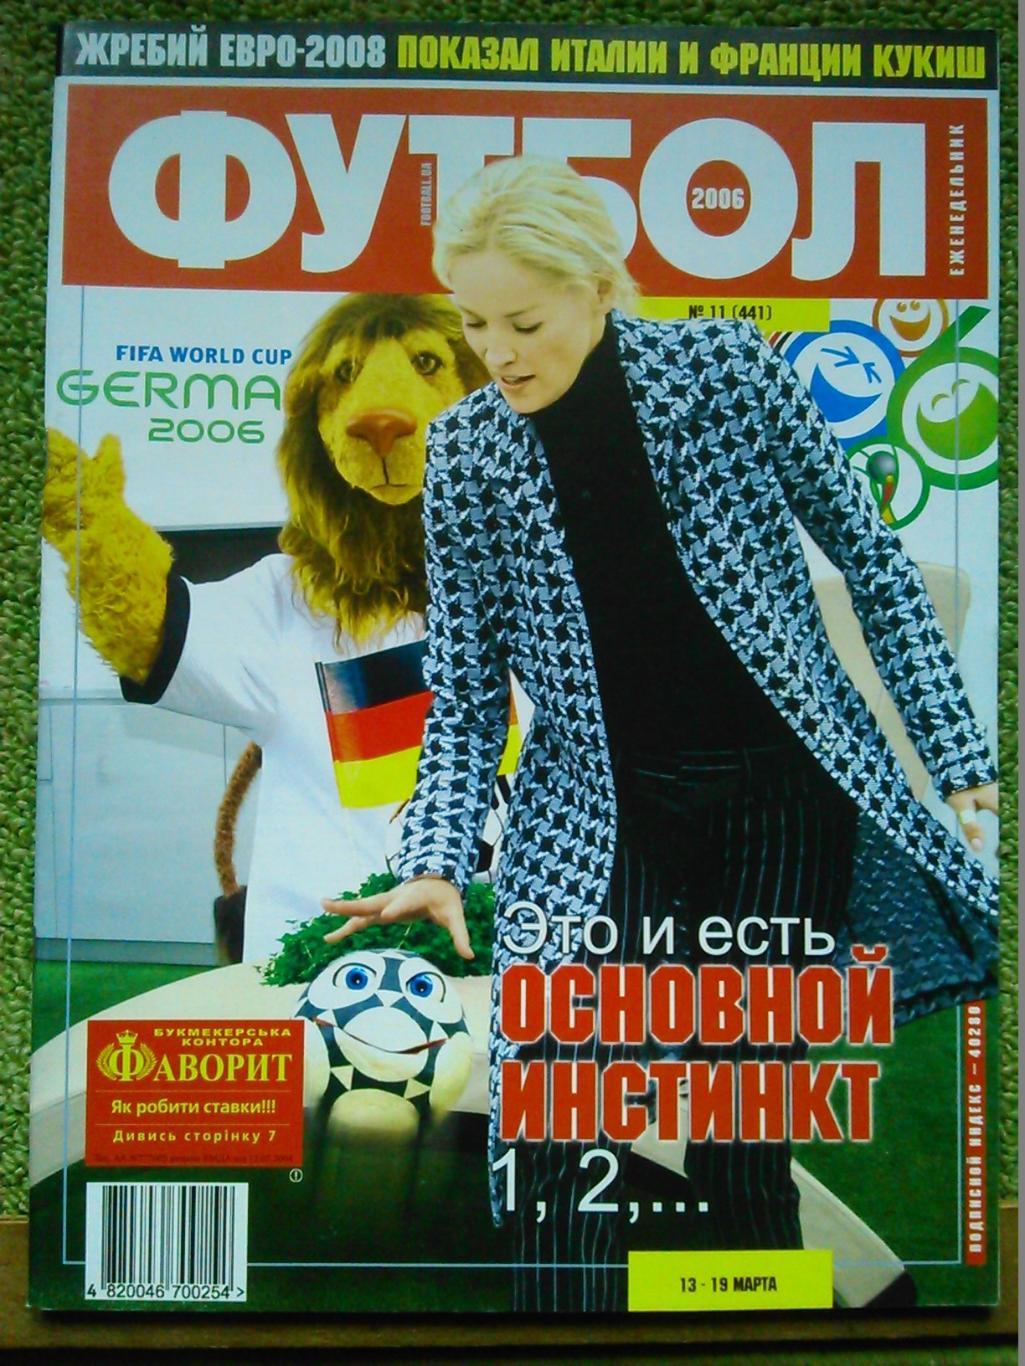 Футбол (Украина)№11(441).2006. Оптом скидки до 45%. Отлично сохранен!